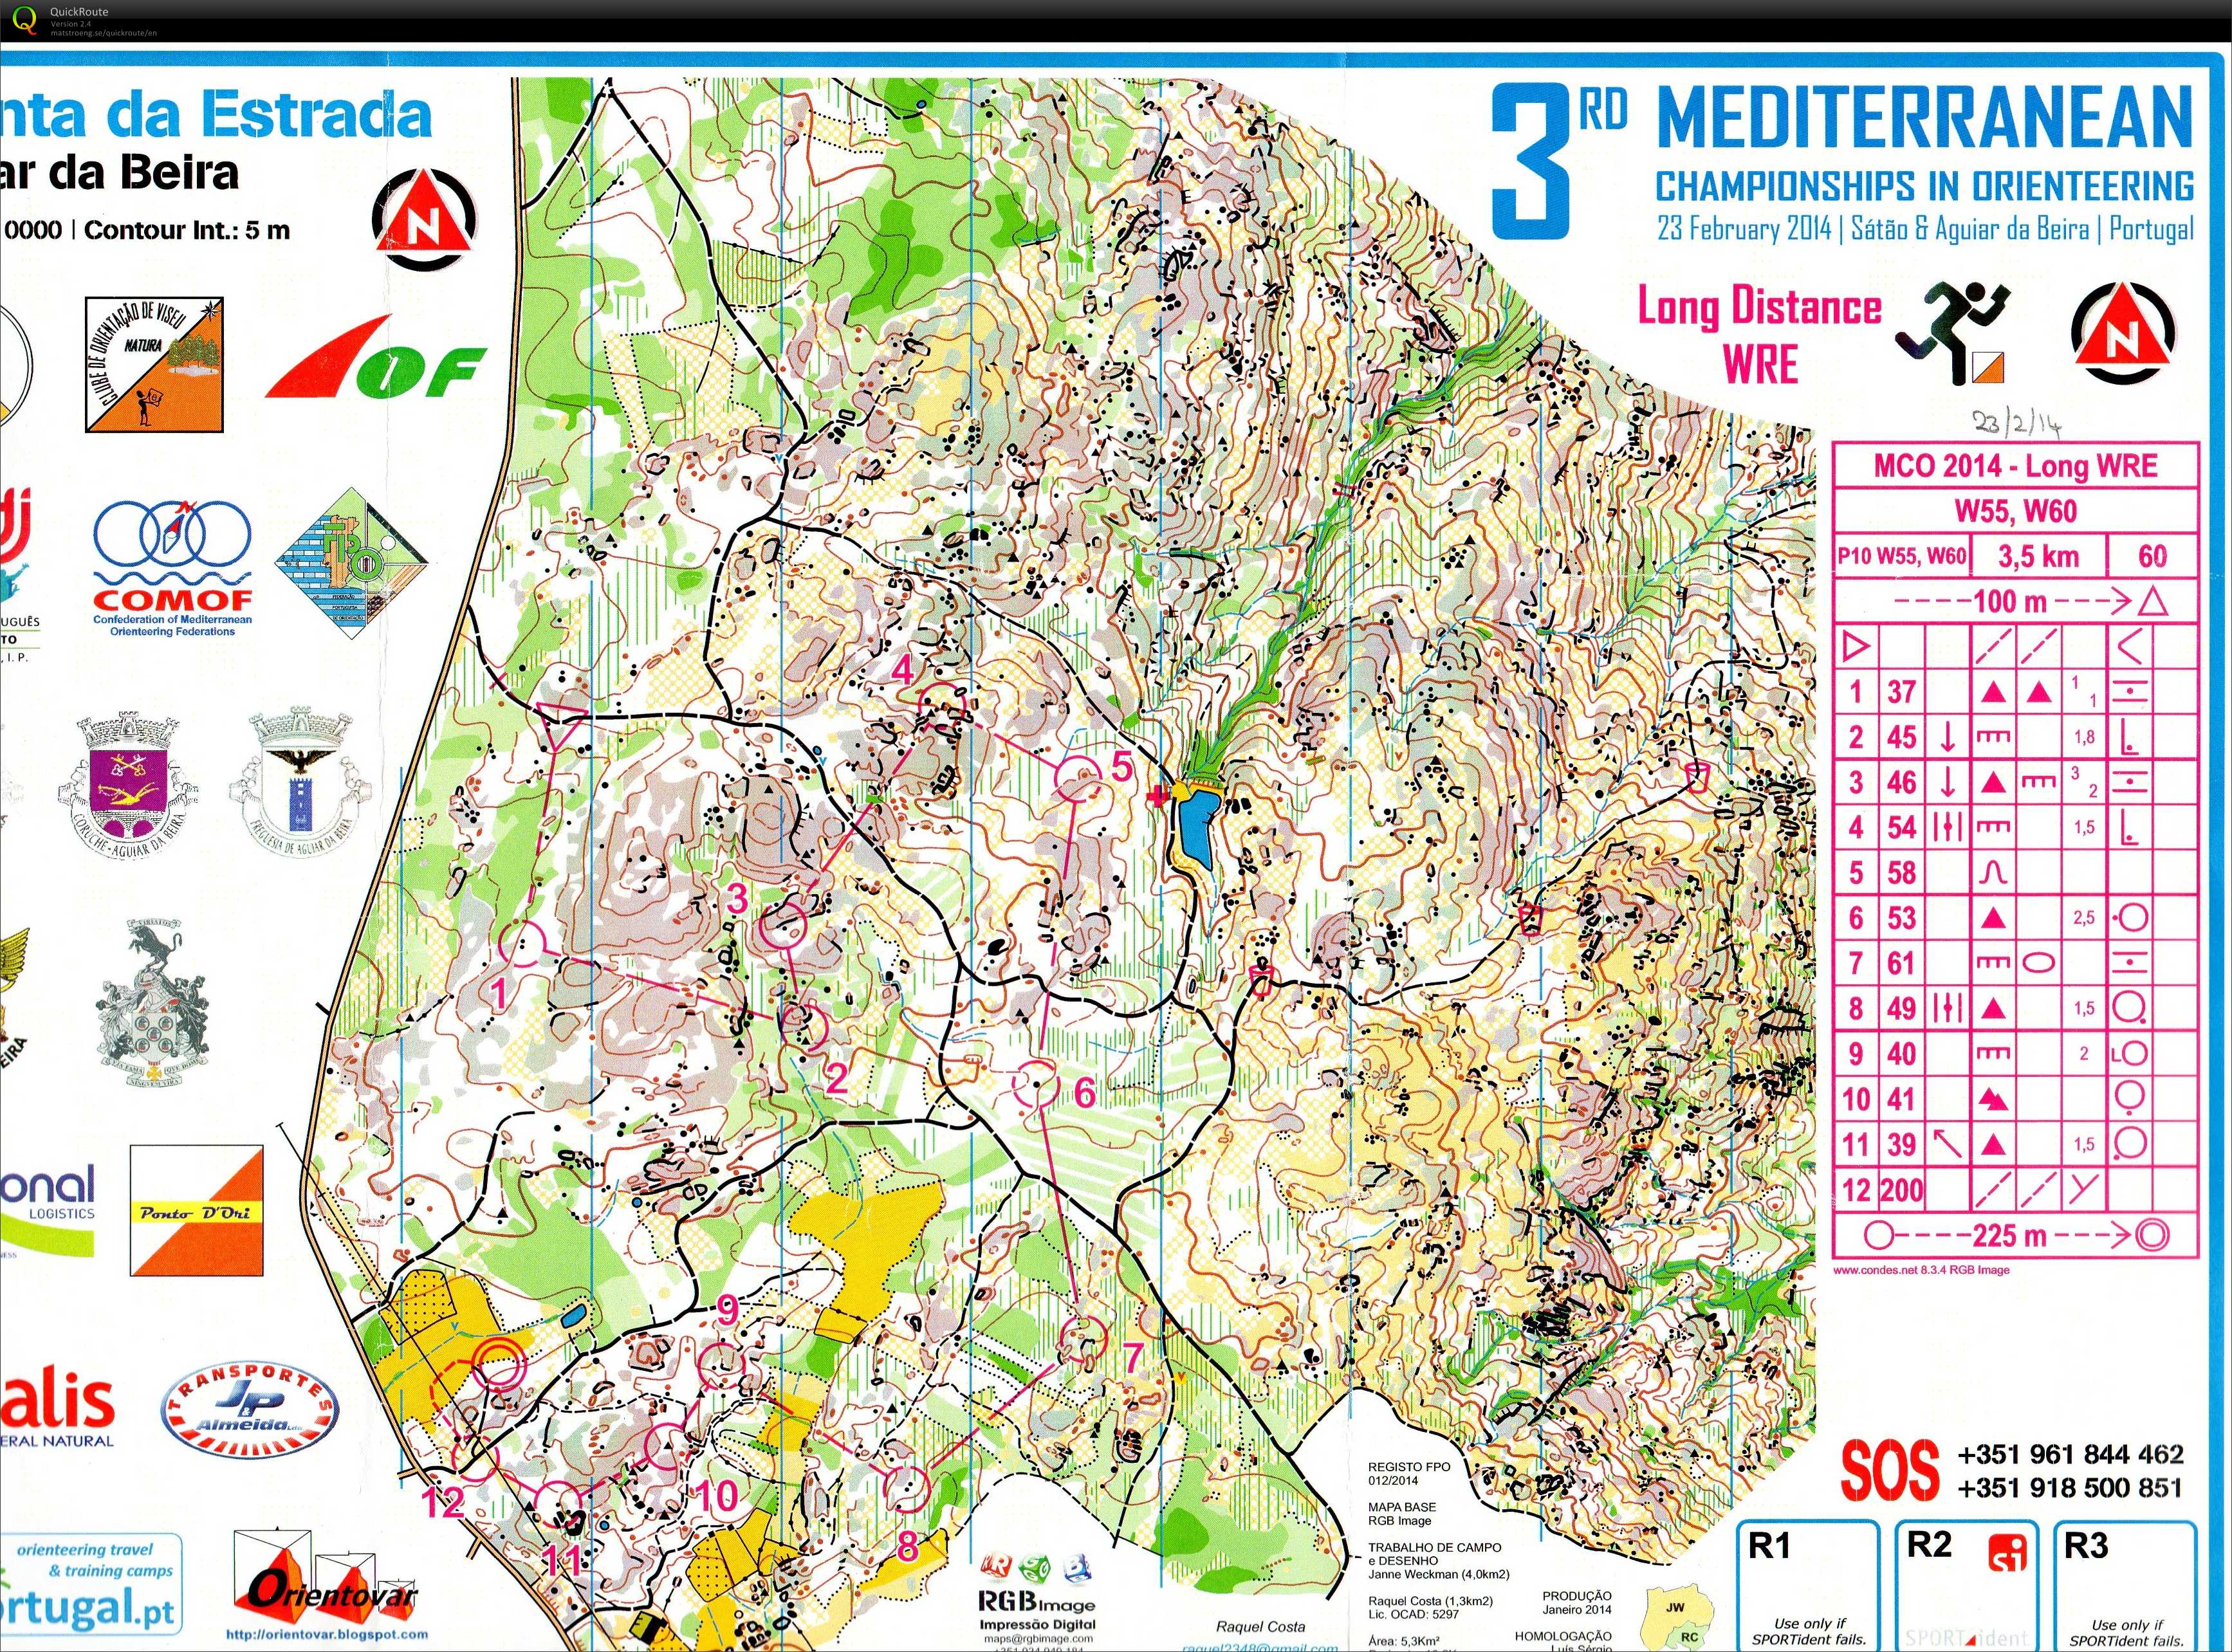 3rd Mediteranean Championships in Orienteering - Long Distance (2014-02-23)